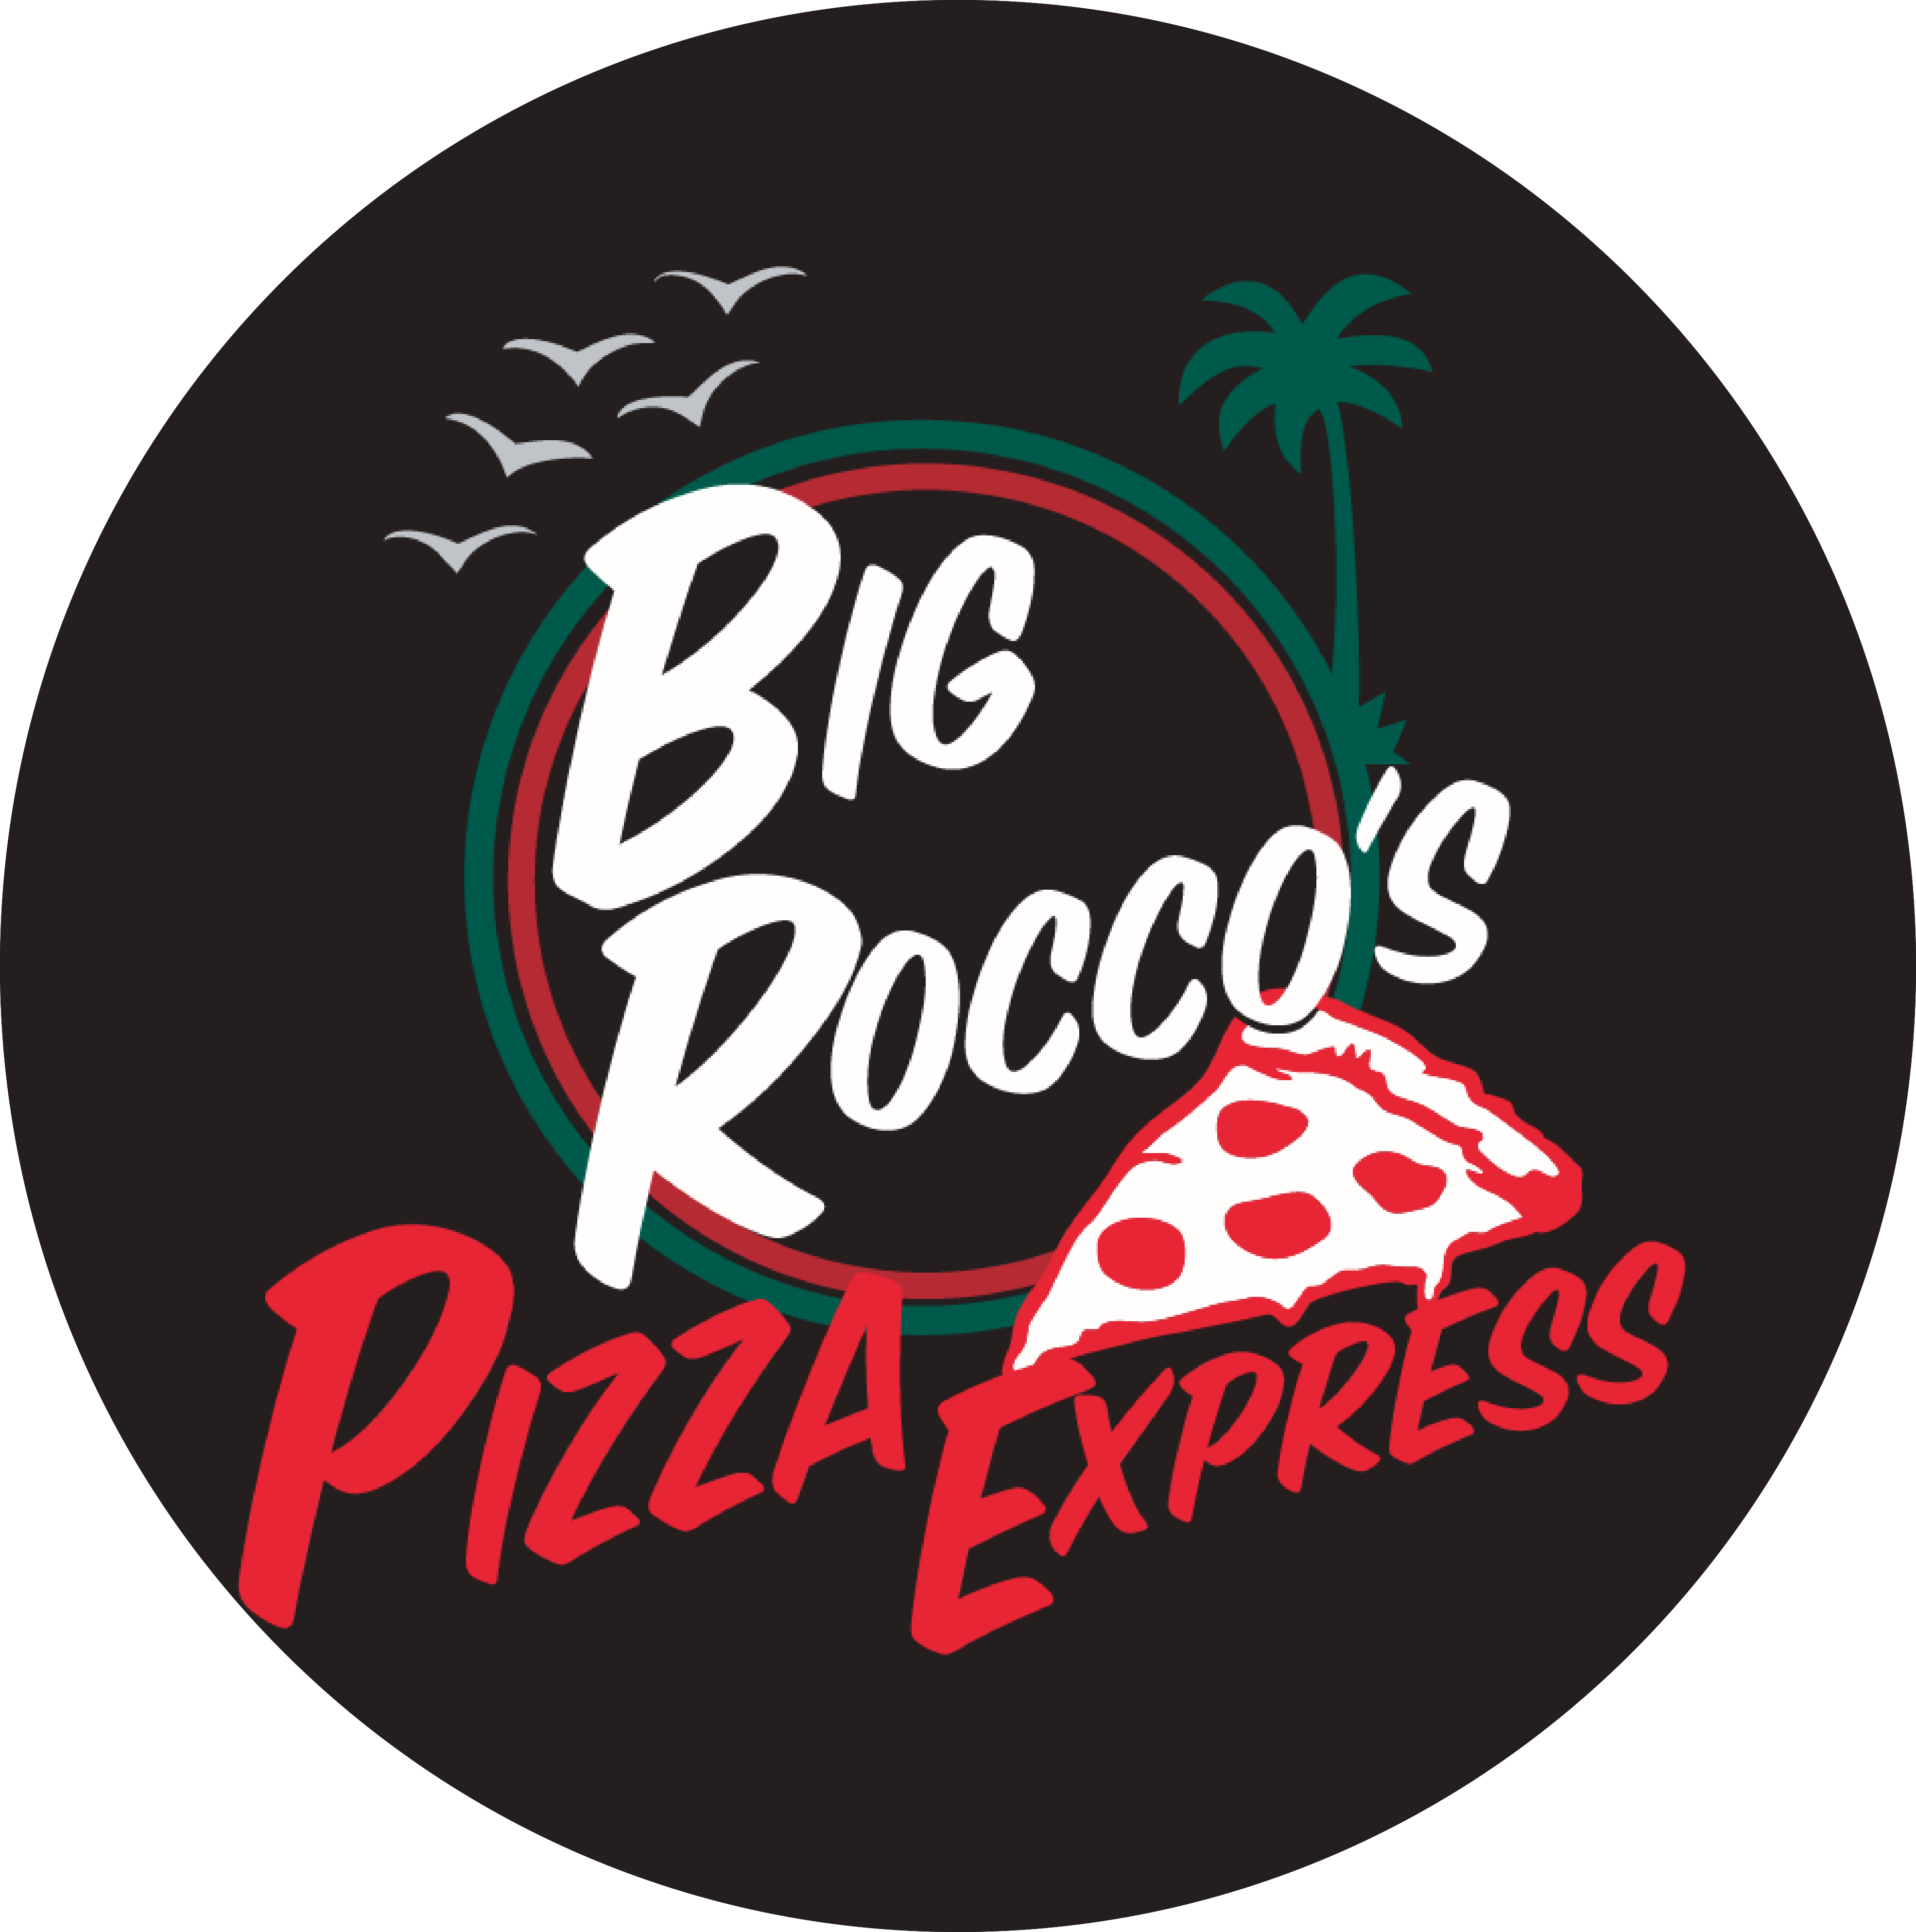 Big Rocco's Pizza Express logo